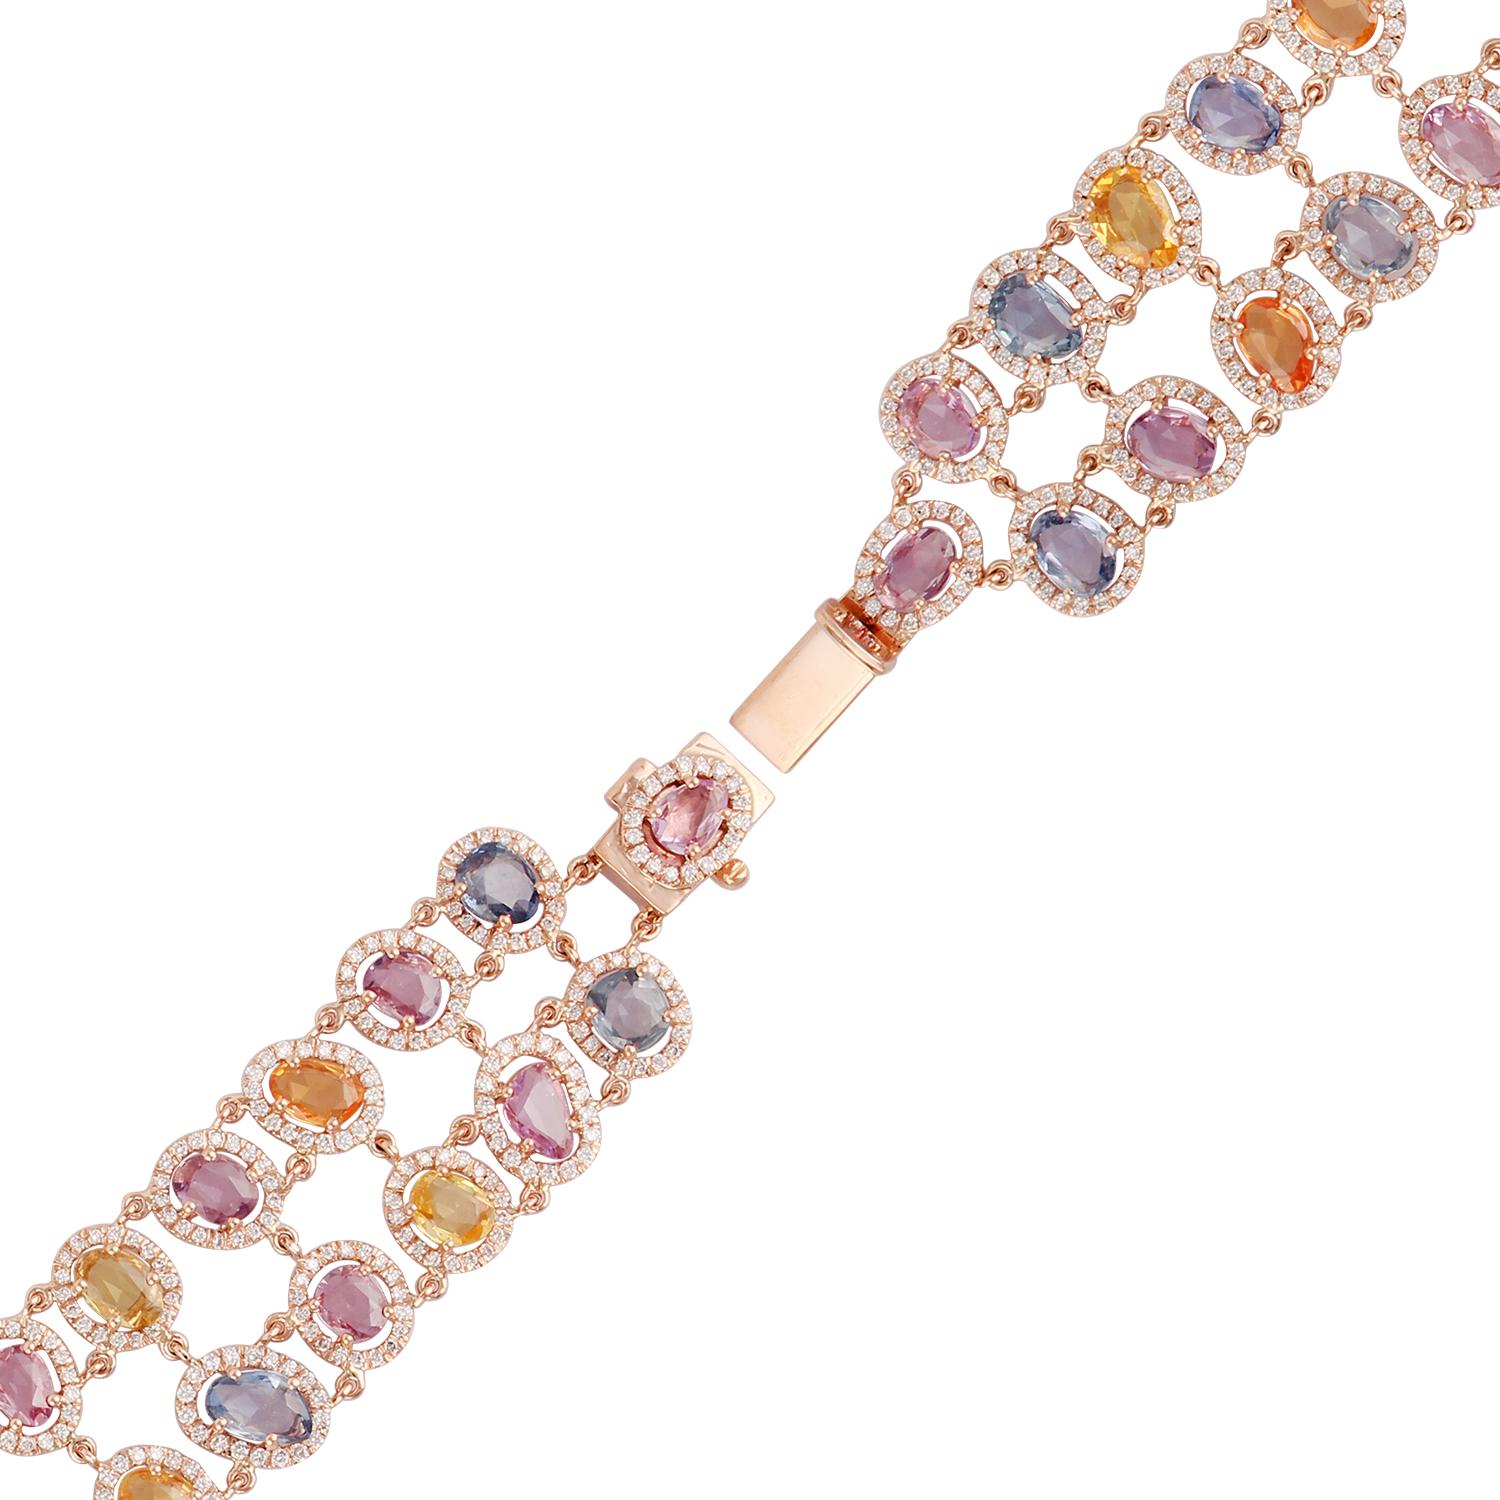 Rose Cut Multicolored Sapphire and Diamond Bracelet Set in 18 Karat Rose Gold